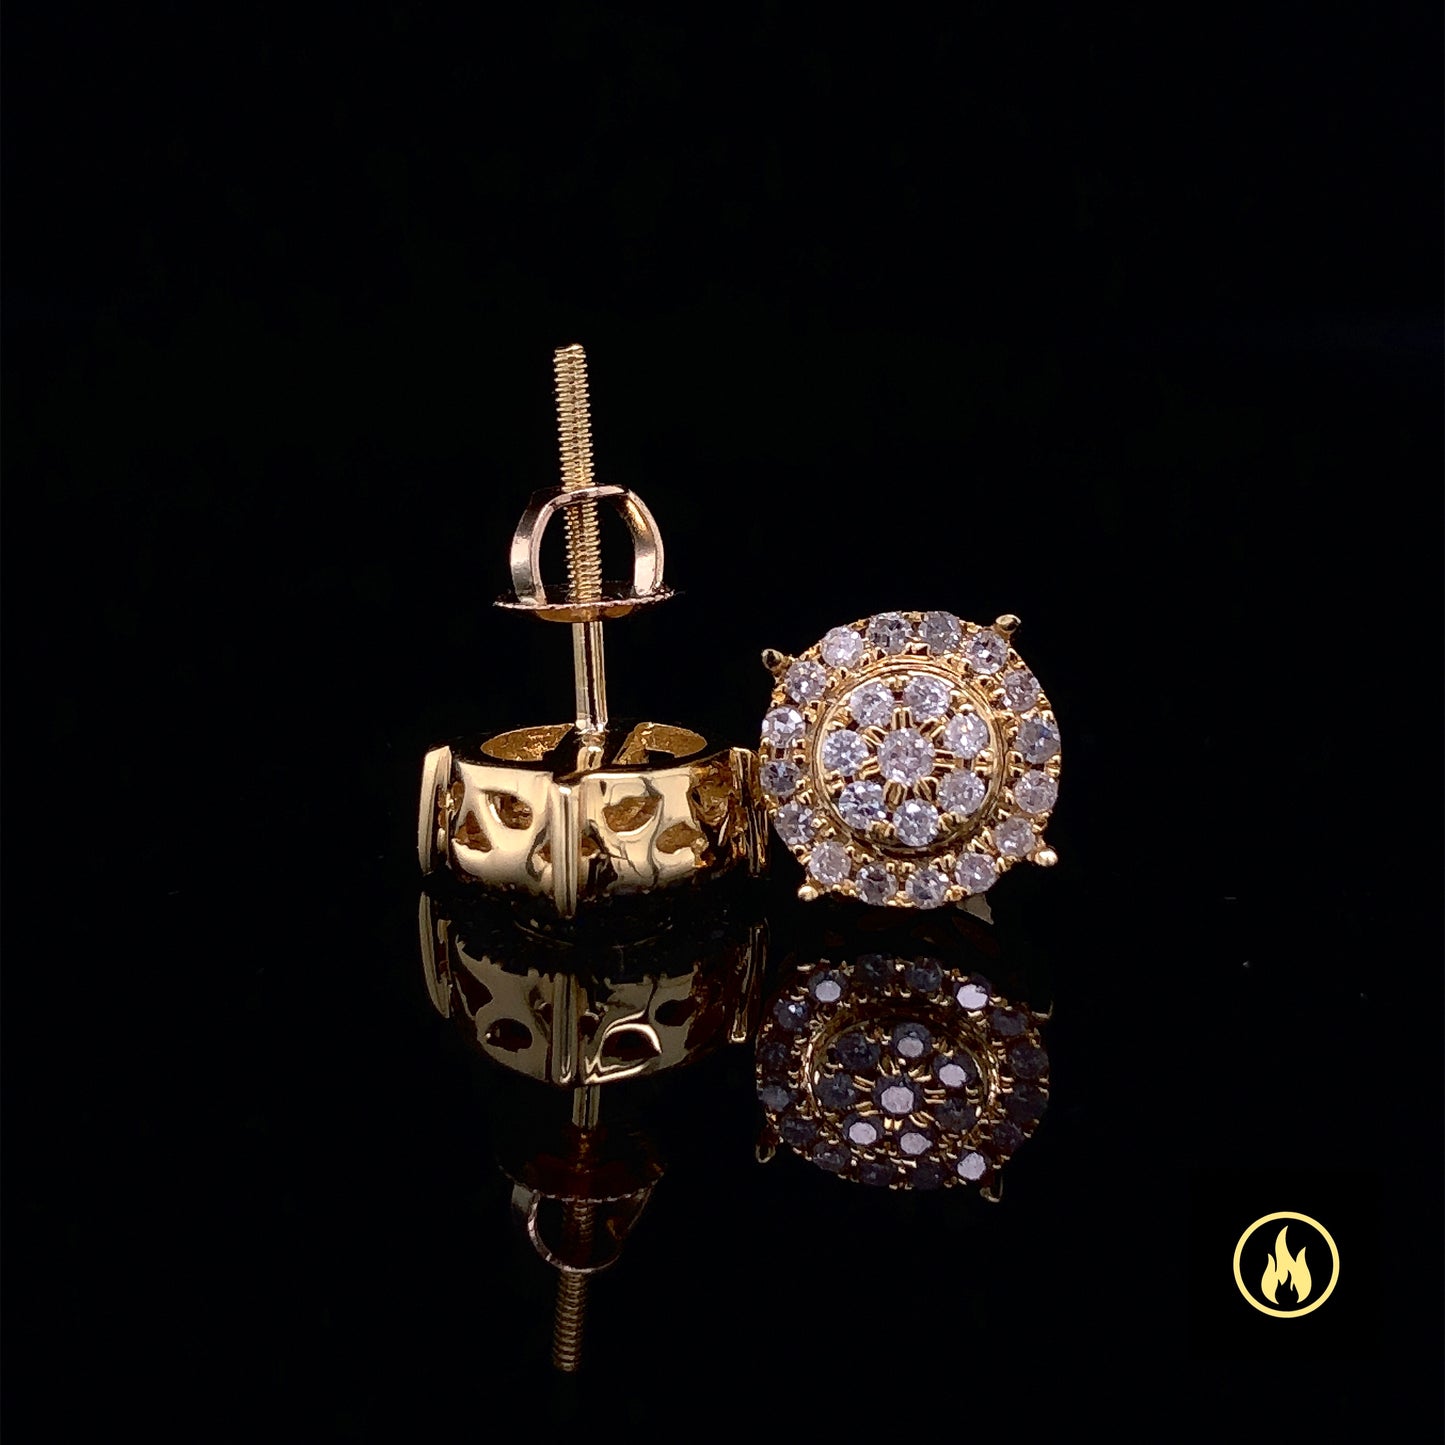 14K Yellow Gold Diamond Earrings 0.33ct